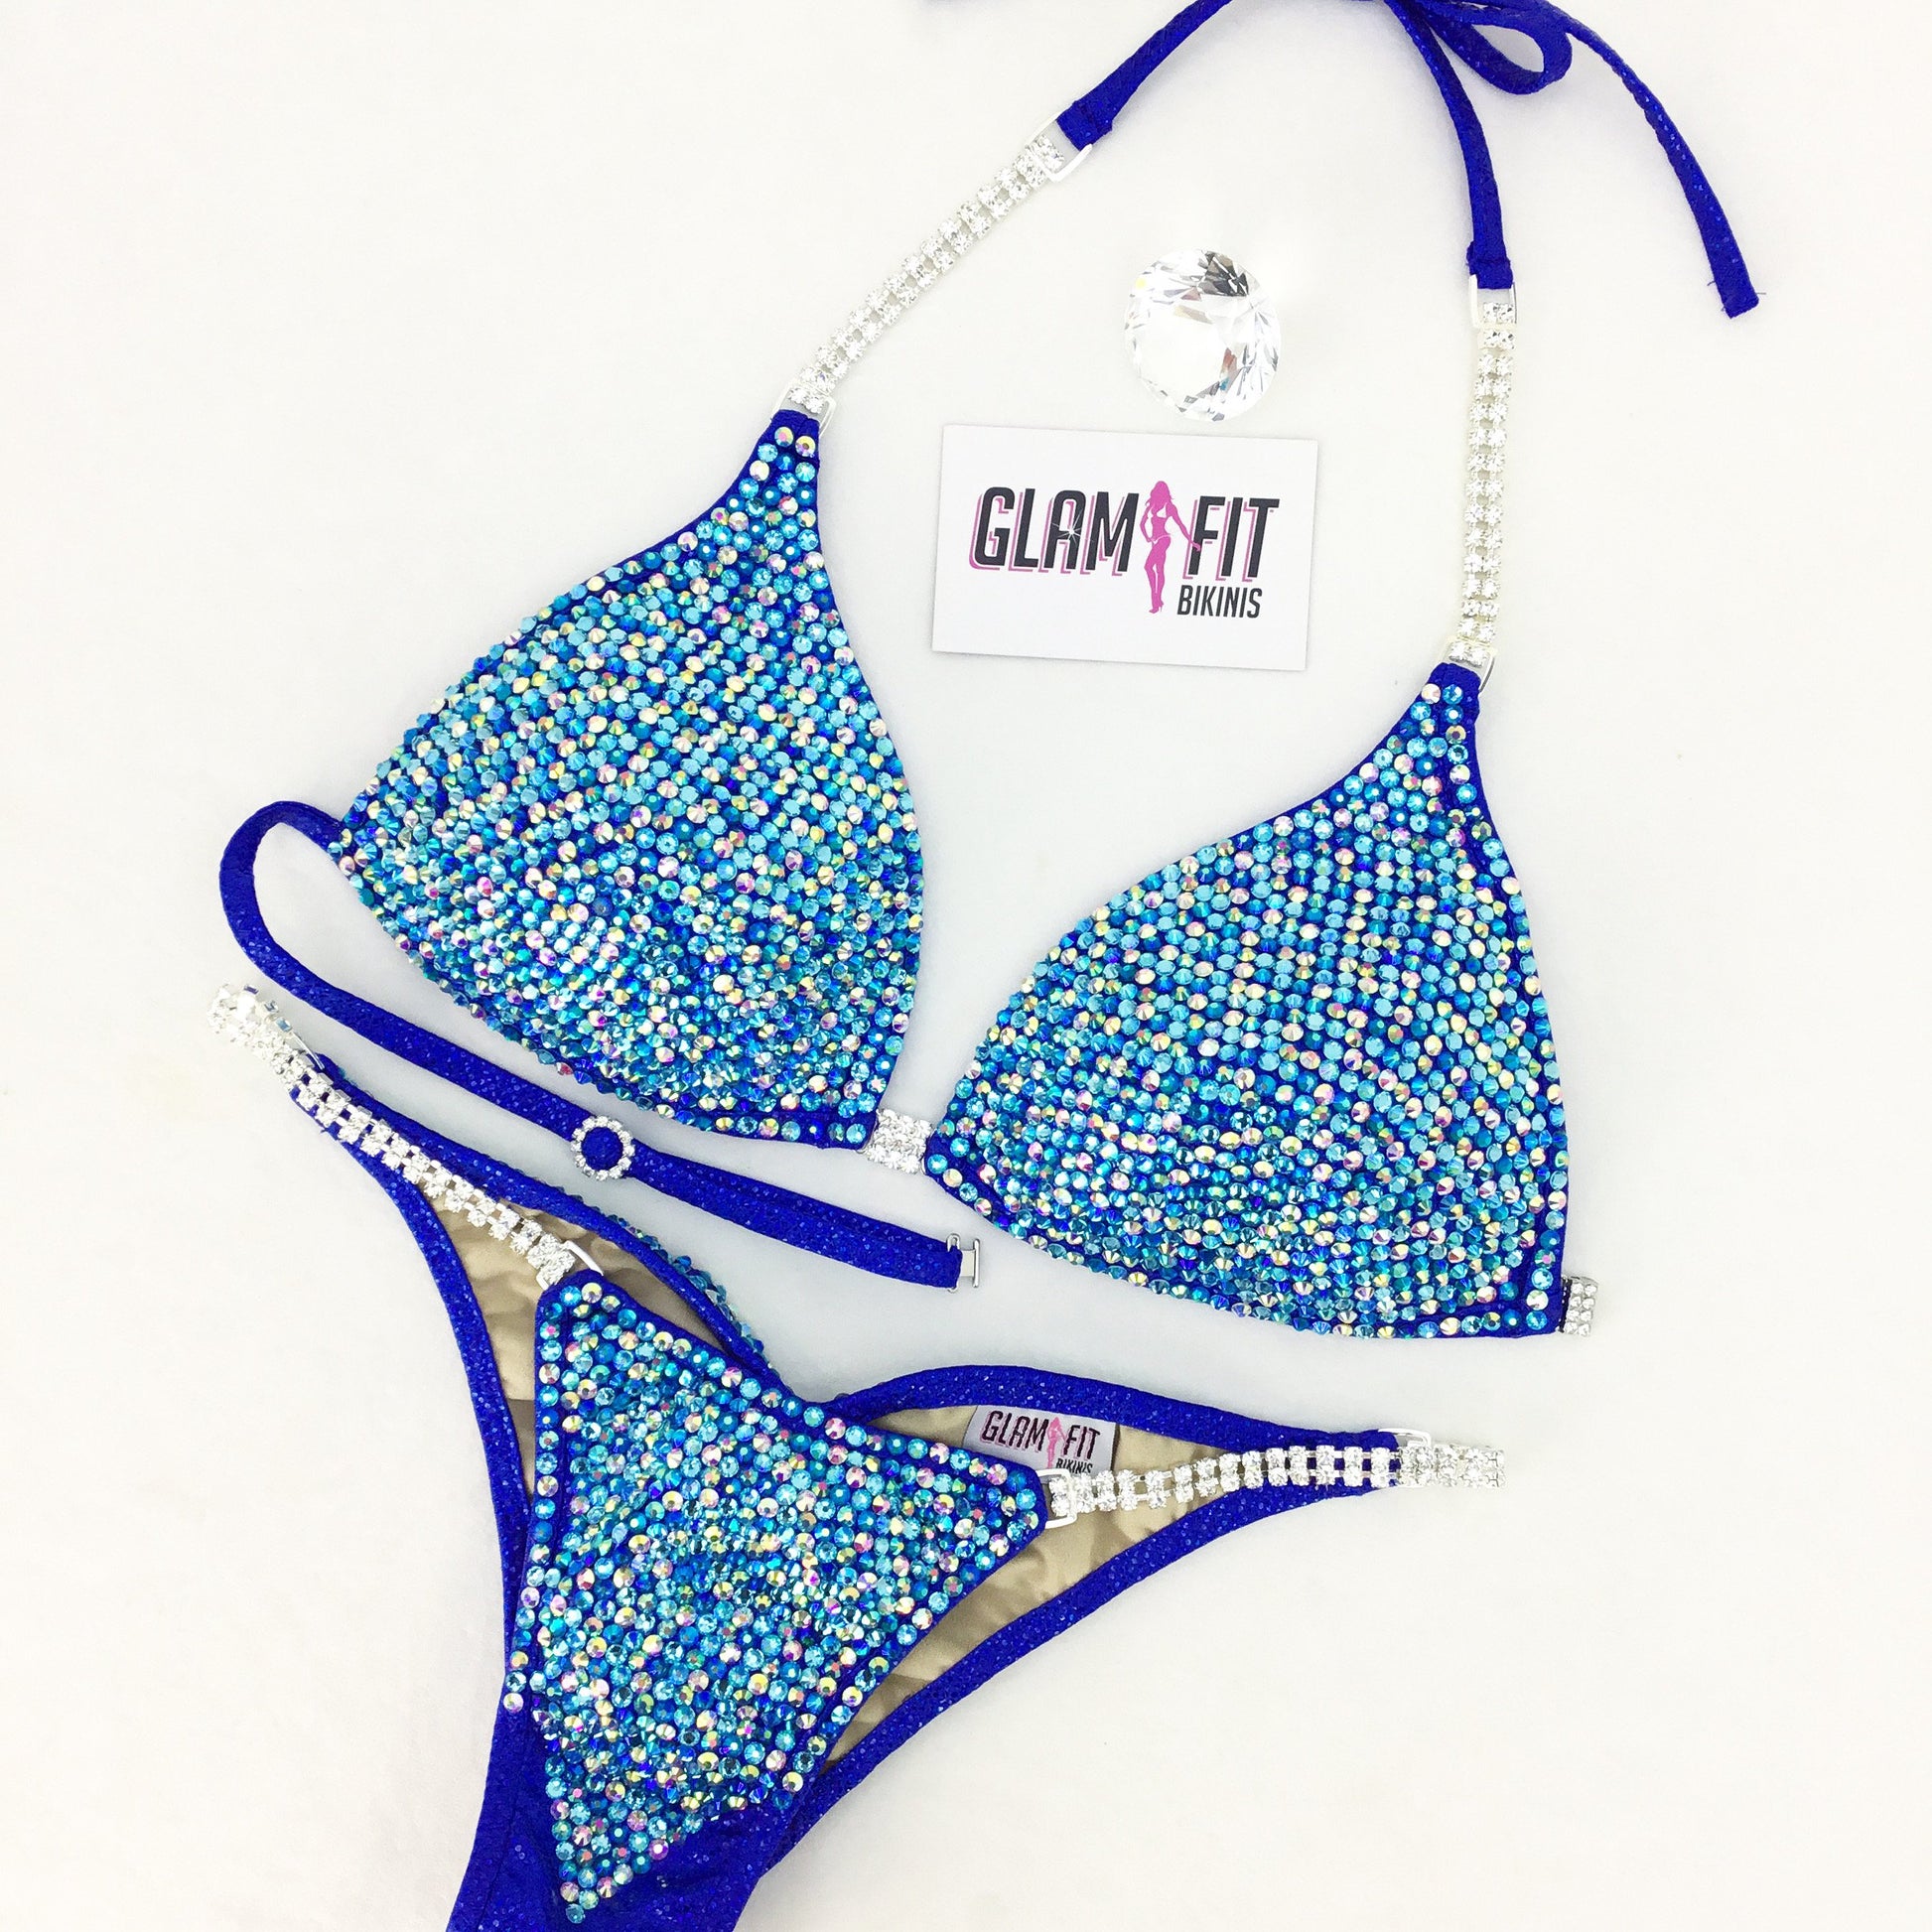 glamfit bikinis figure suit competition bikini ifbb npc icn anb embellished